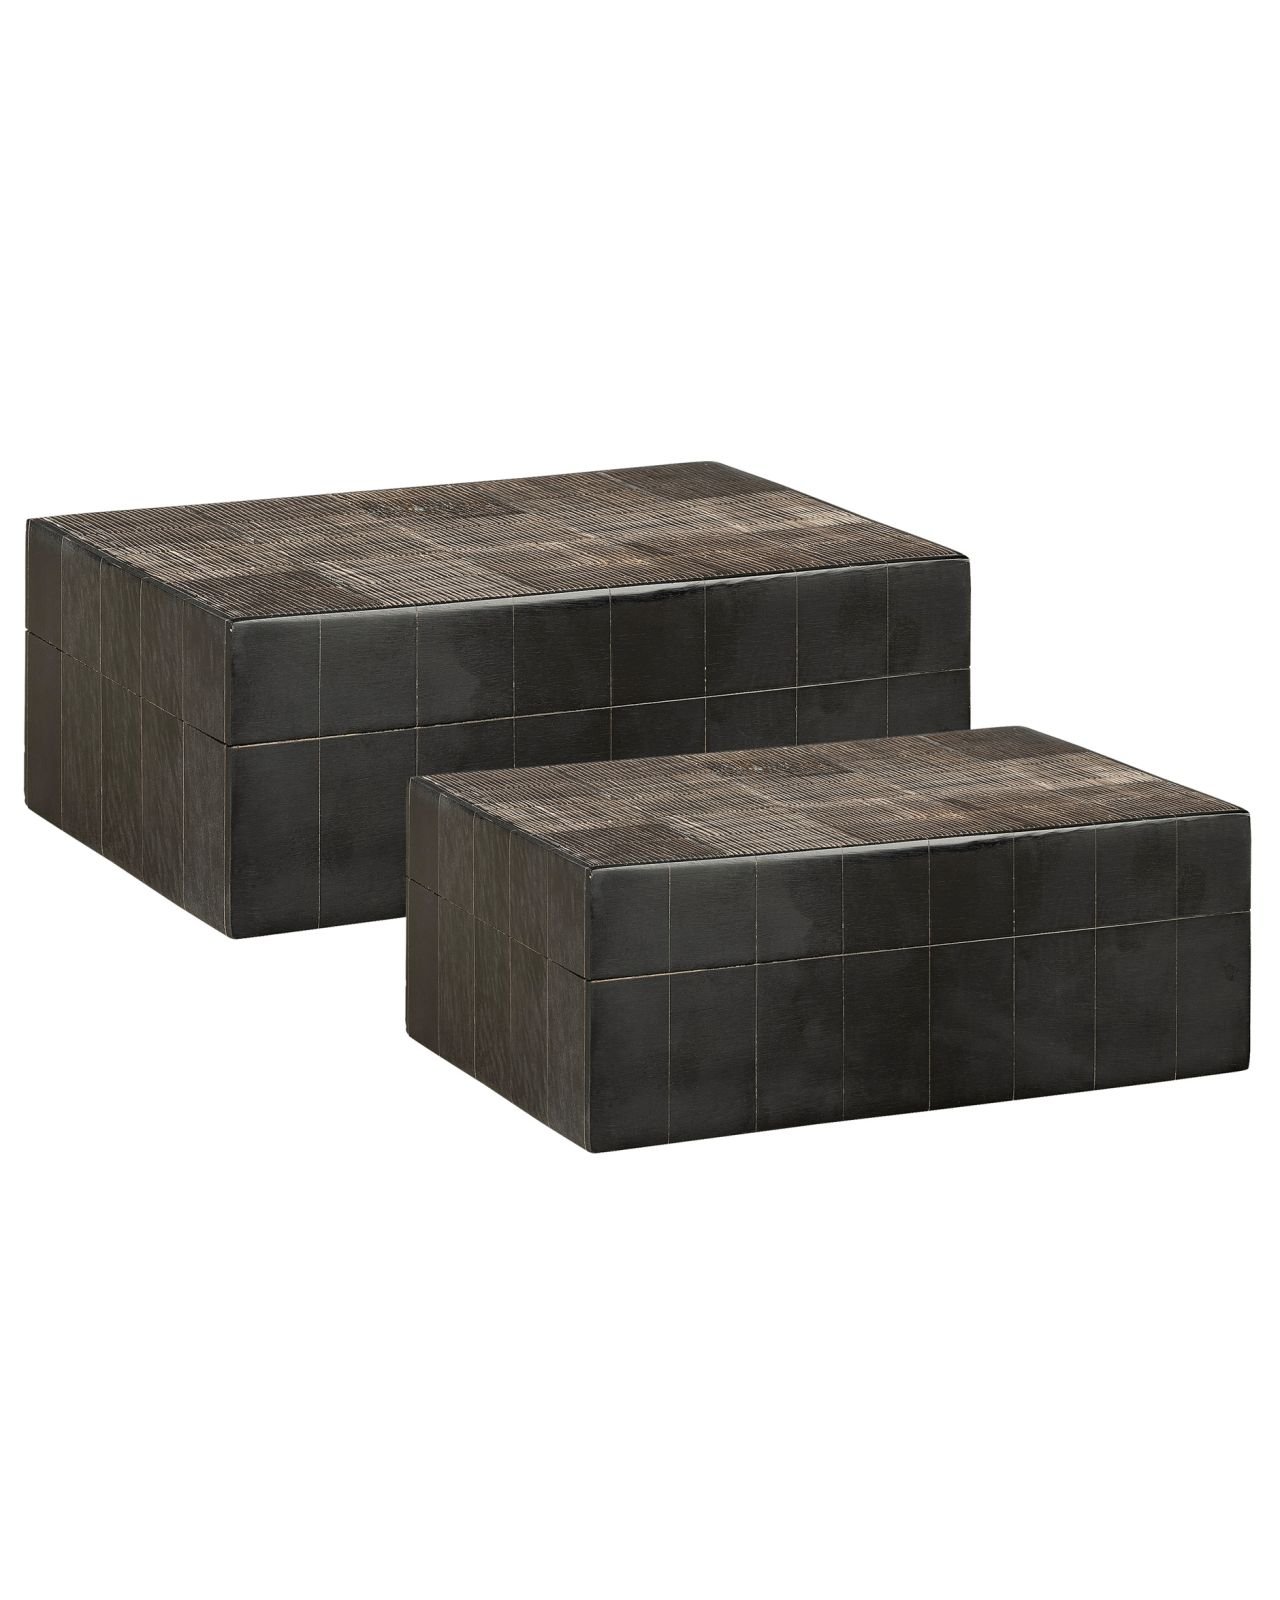 Avorio storage boxes brown/black